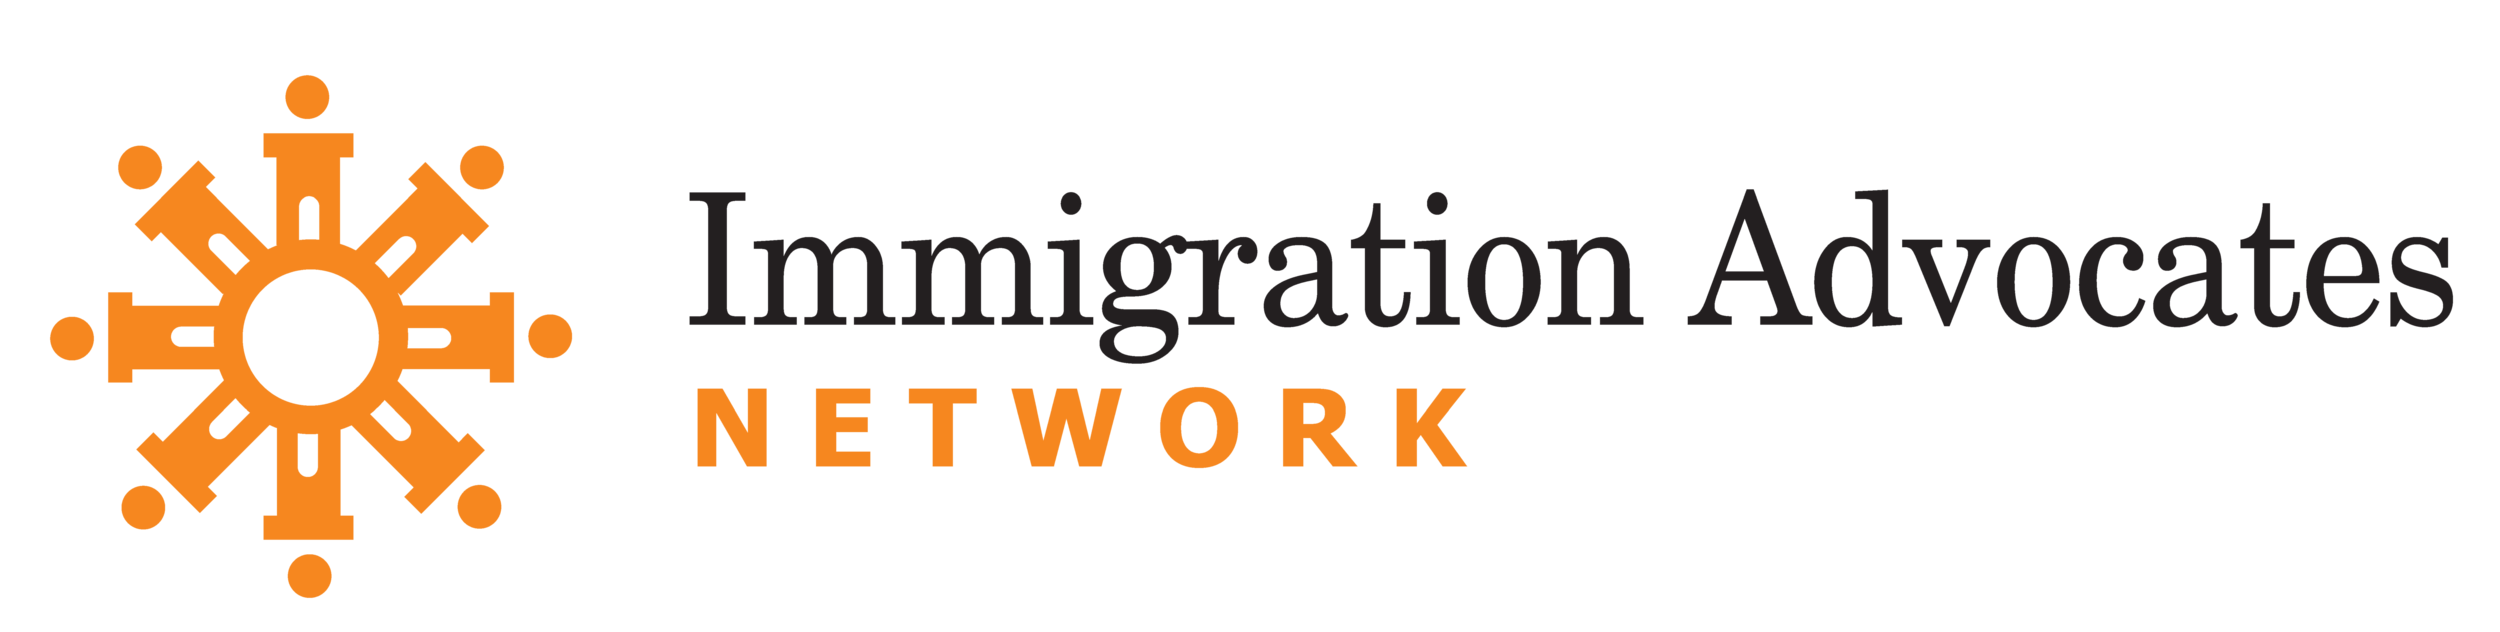 Immigration Advocates Network